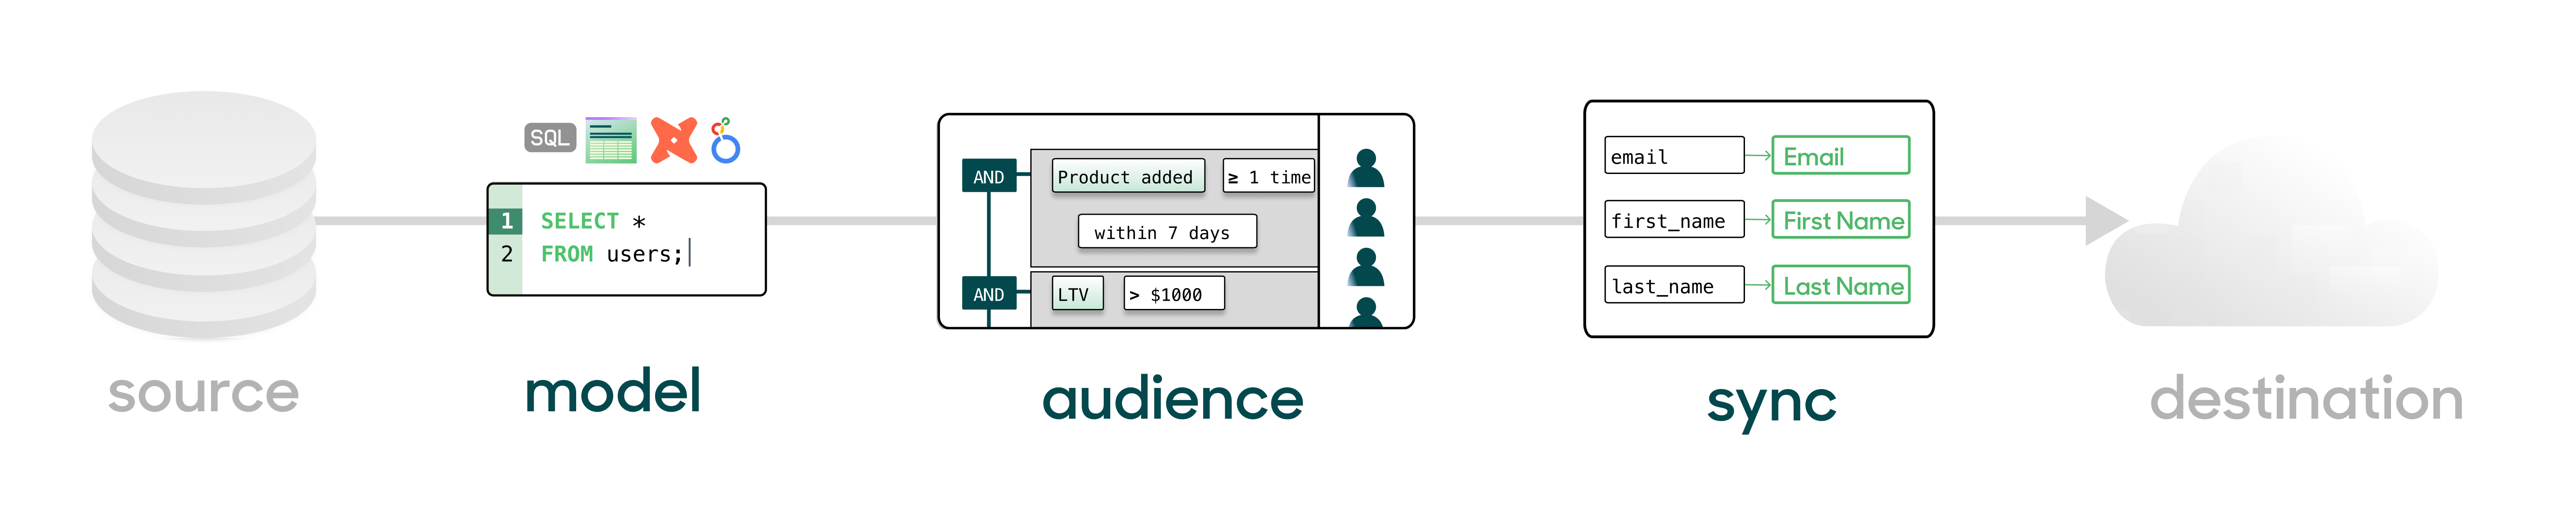 Audience implementation steps diagram